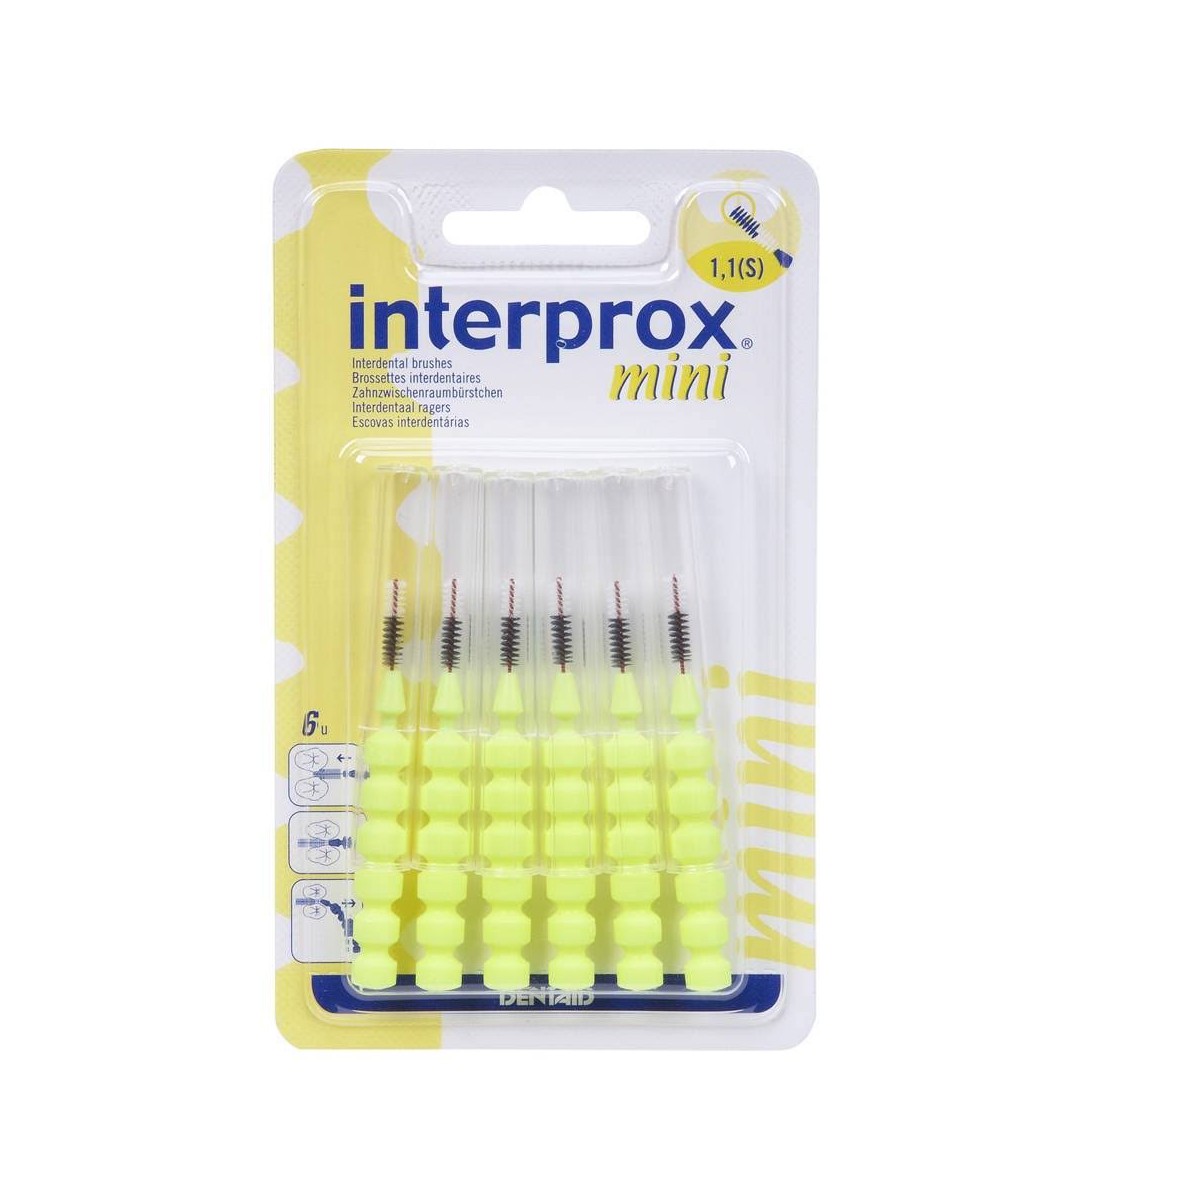 Interprox 4G Mini 6 unidades